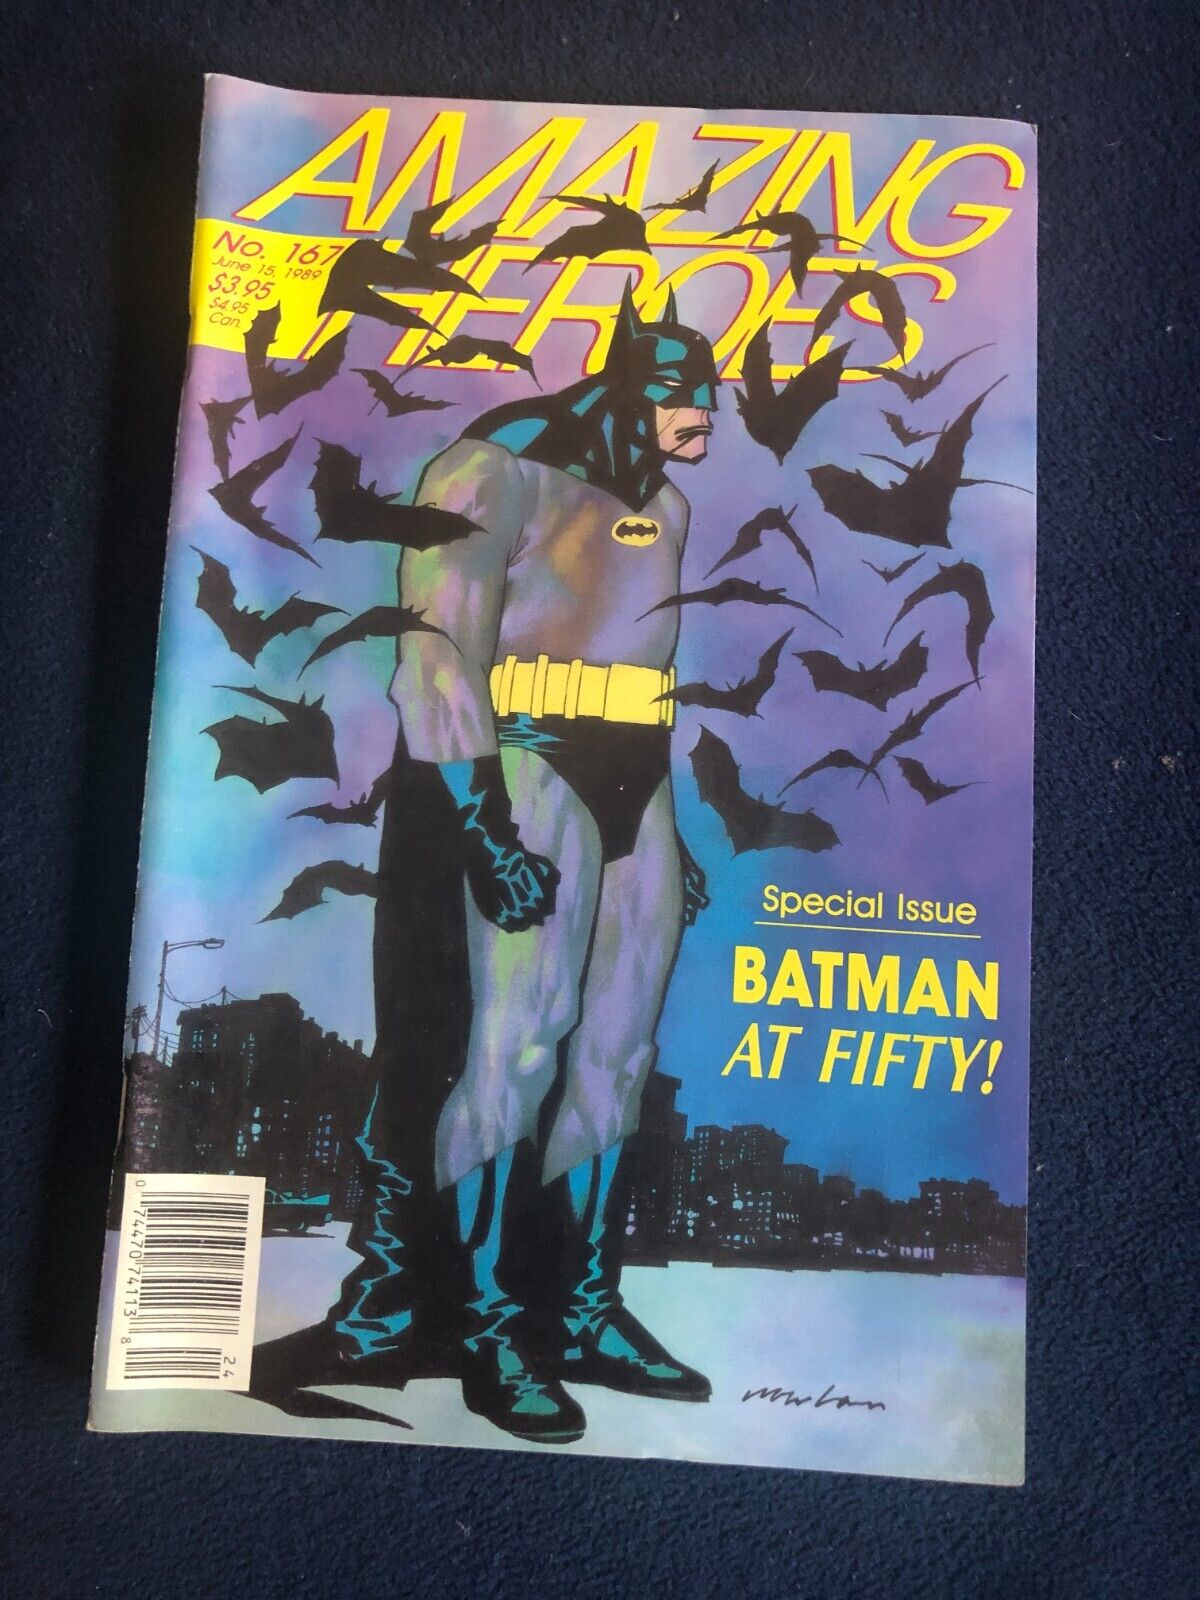 Redbeard/Fantagraphics AMAZING HEROES #167 (1989) - Batman At 50